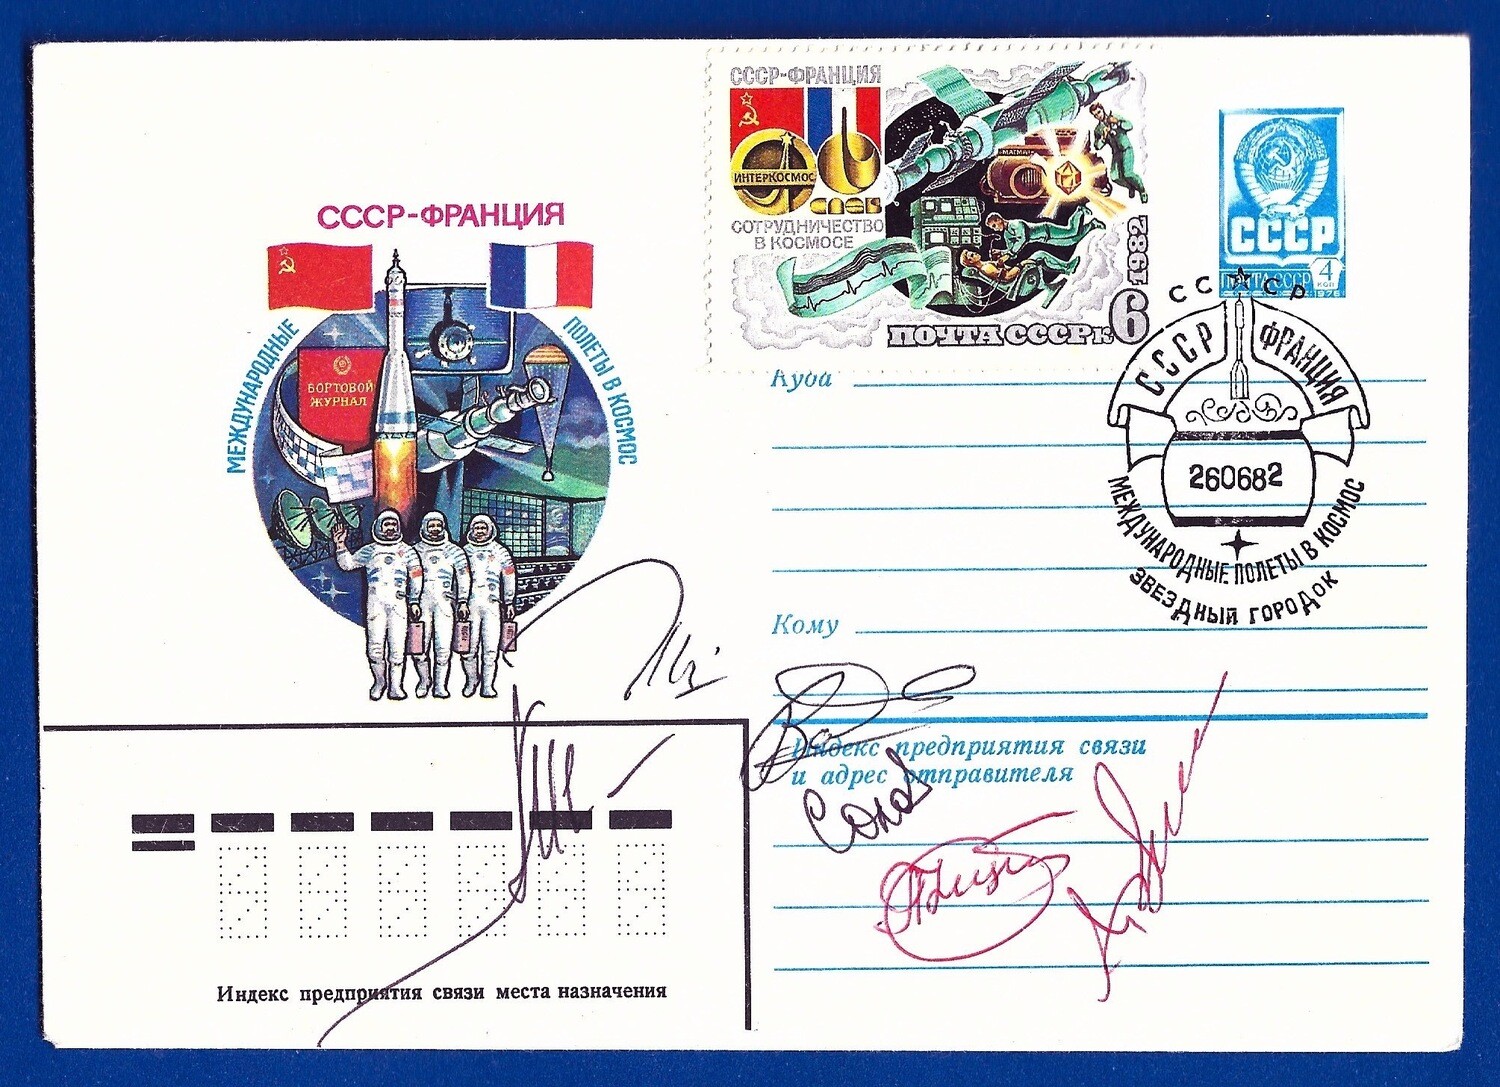 1982 Soyuz T-6 & Backup crew signed cover